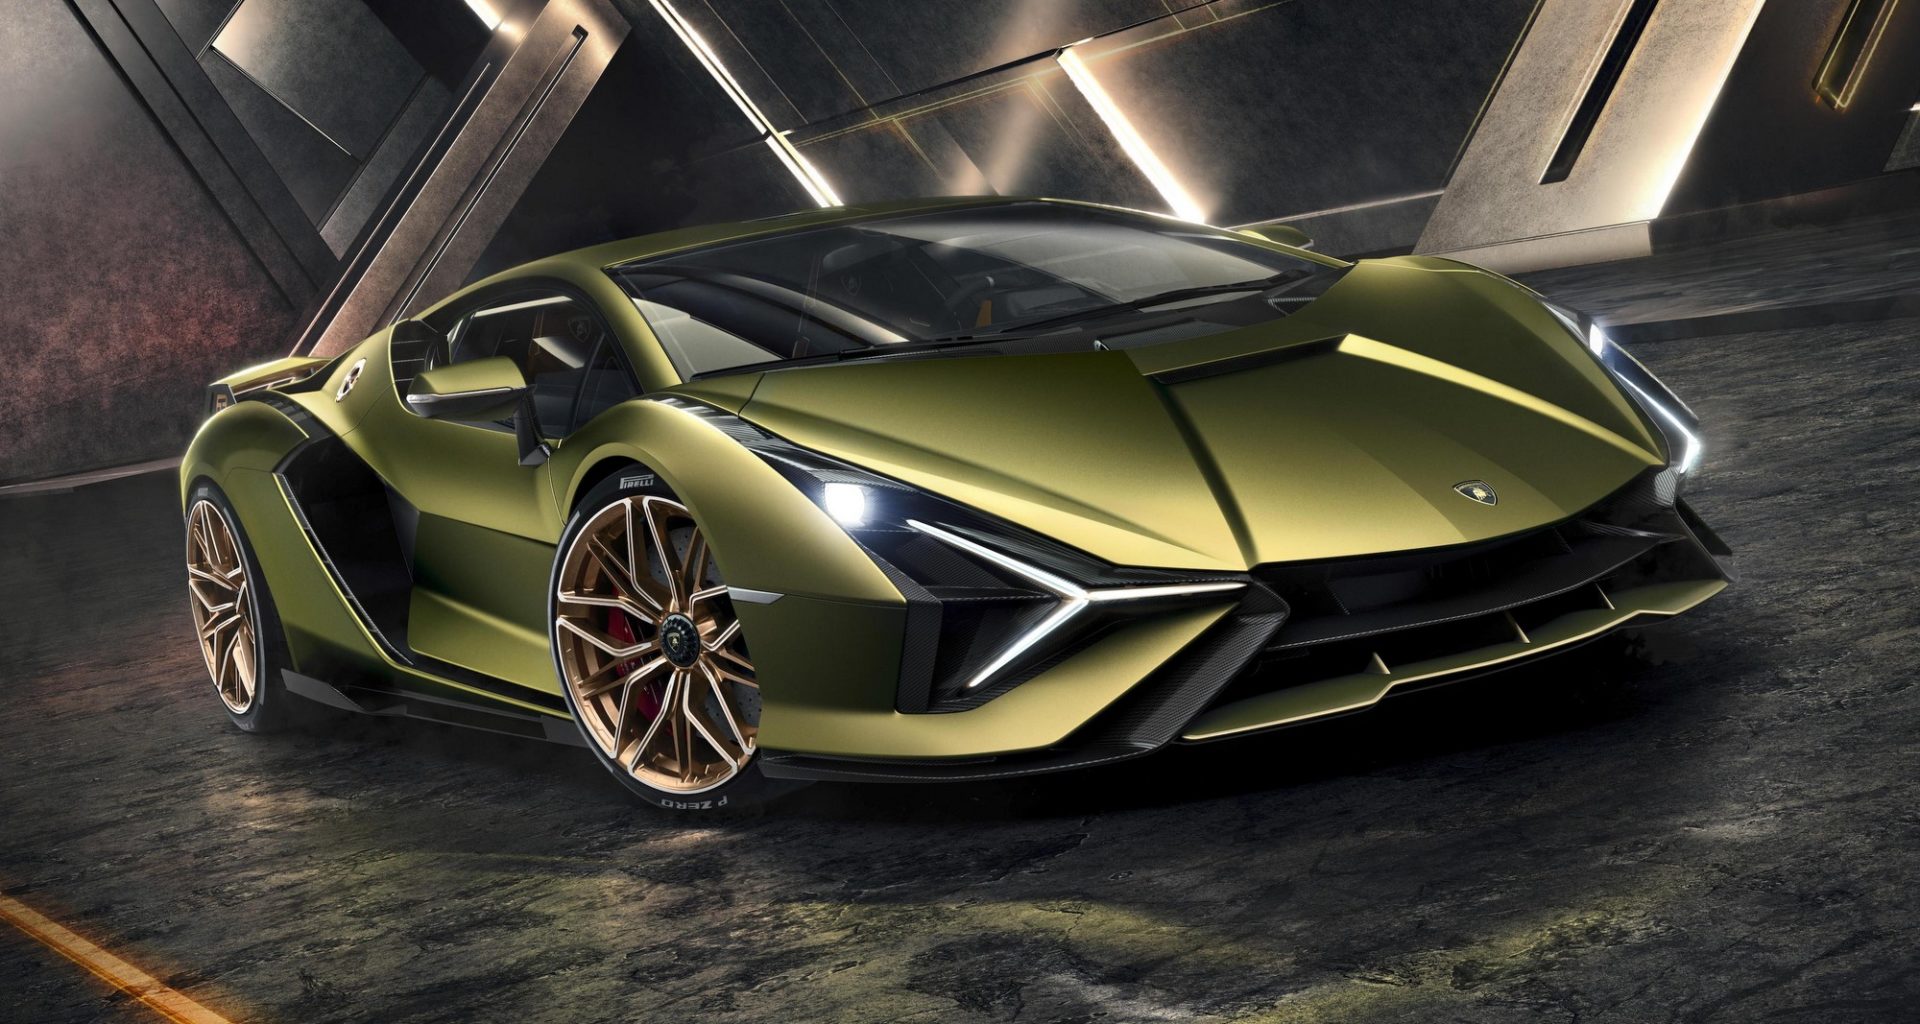 News: Lamborghini Enters the Electric Car Race | Clean Fleet Report